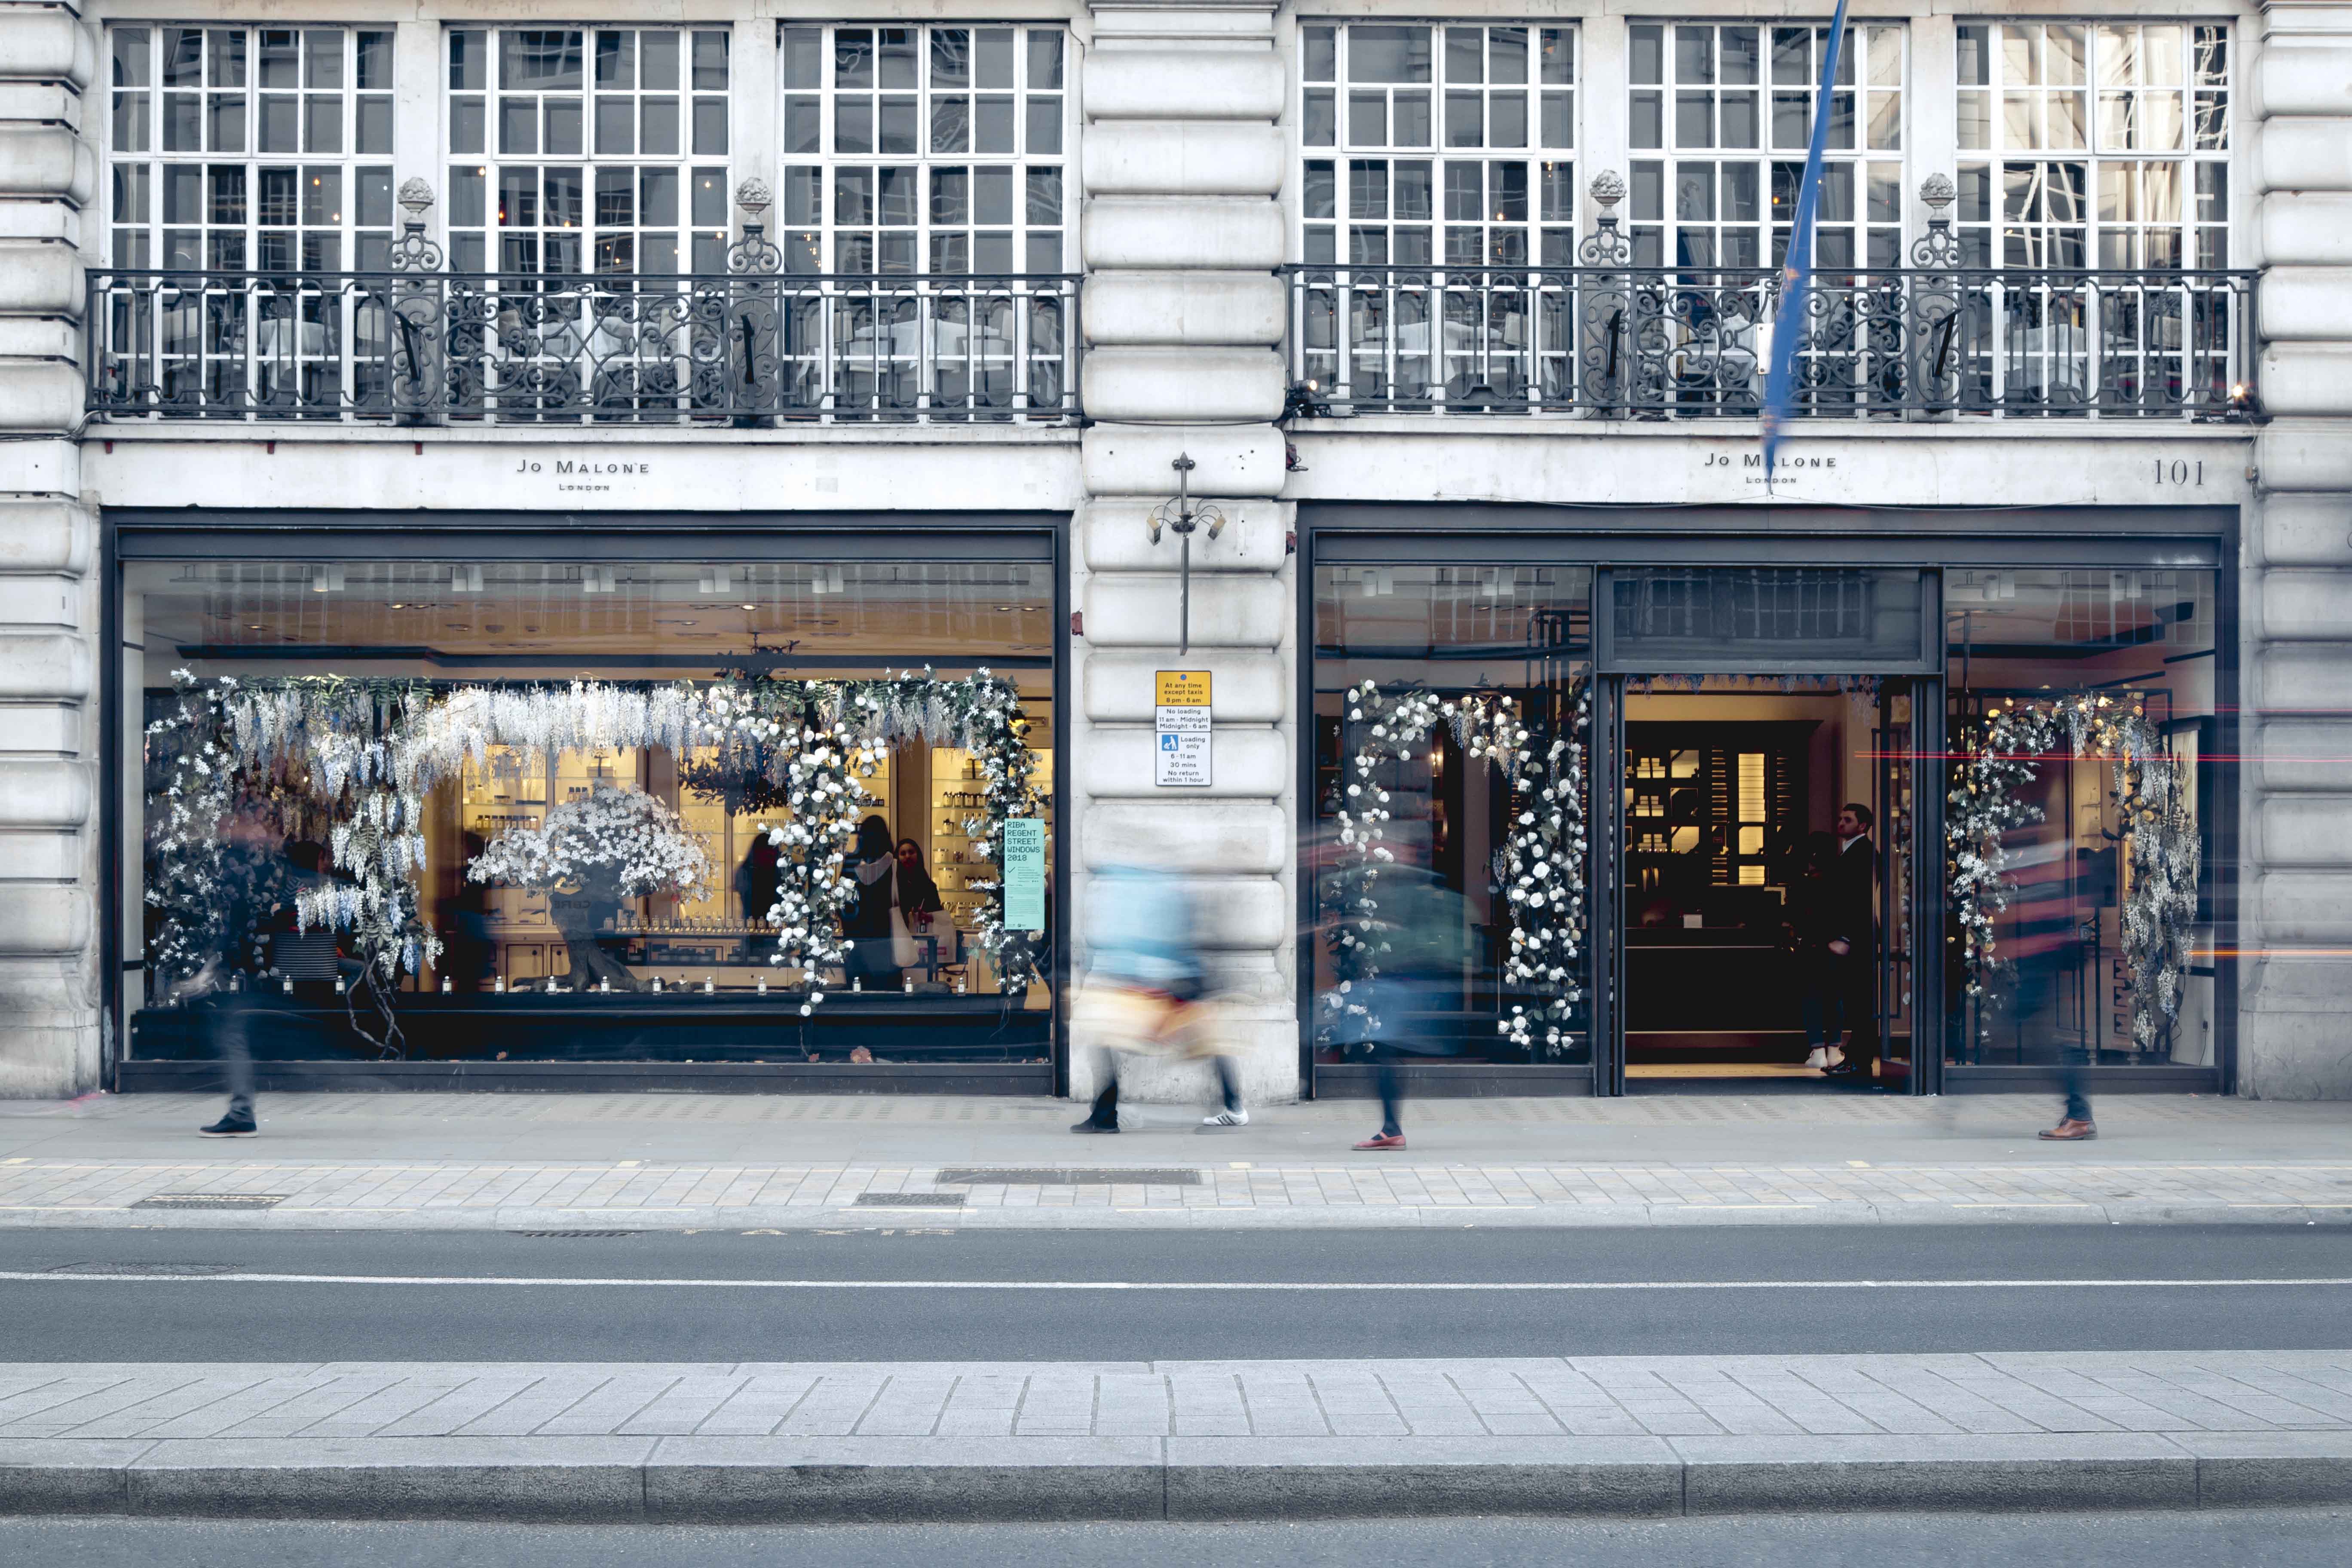 Jo Malone London interior design for visual merchandising of shop window display